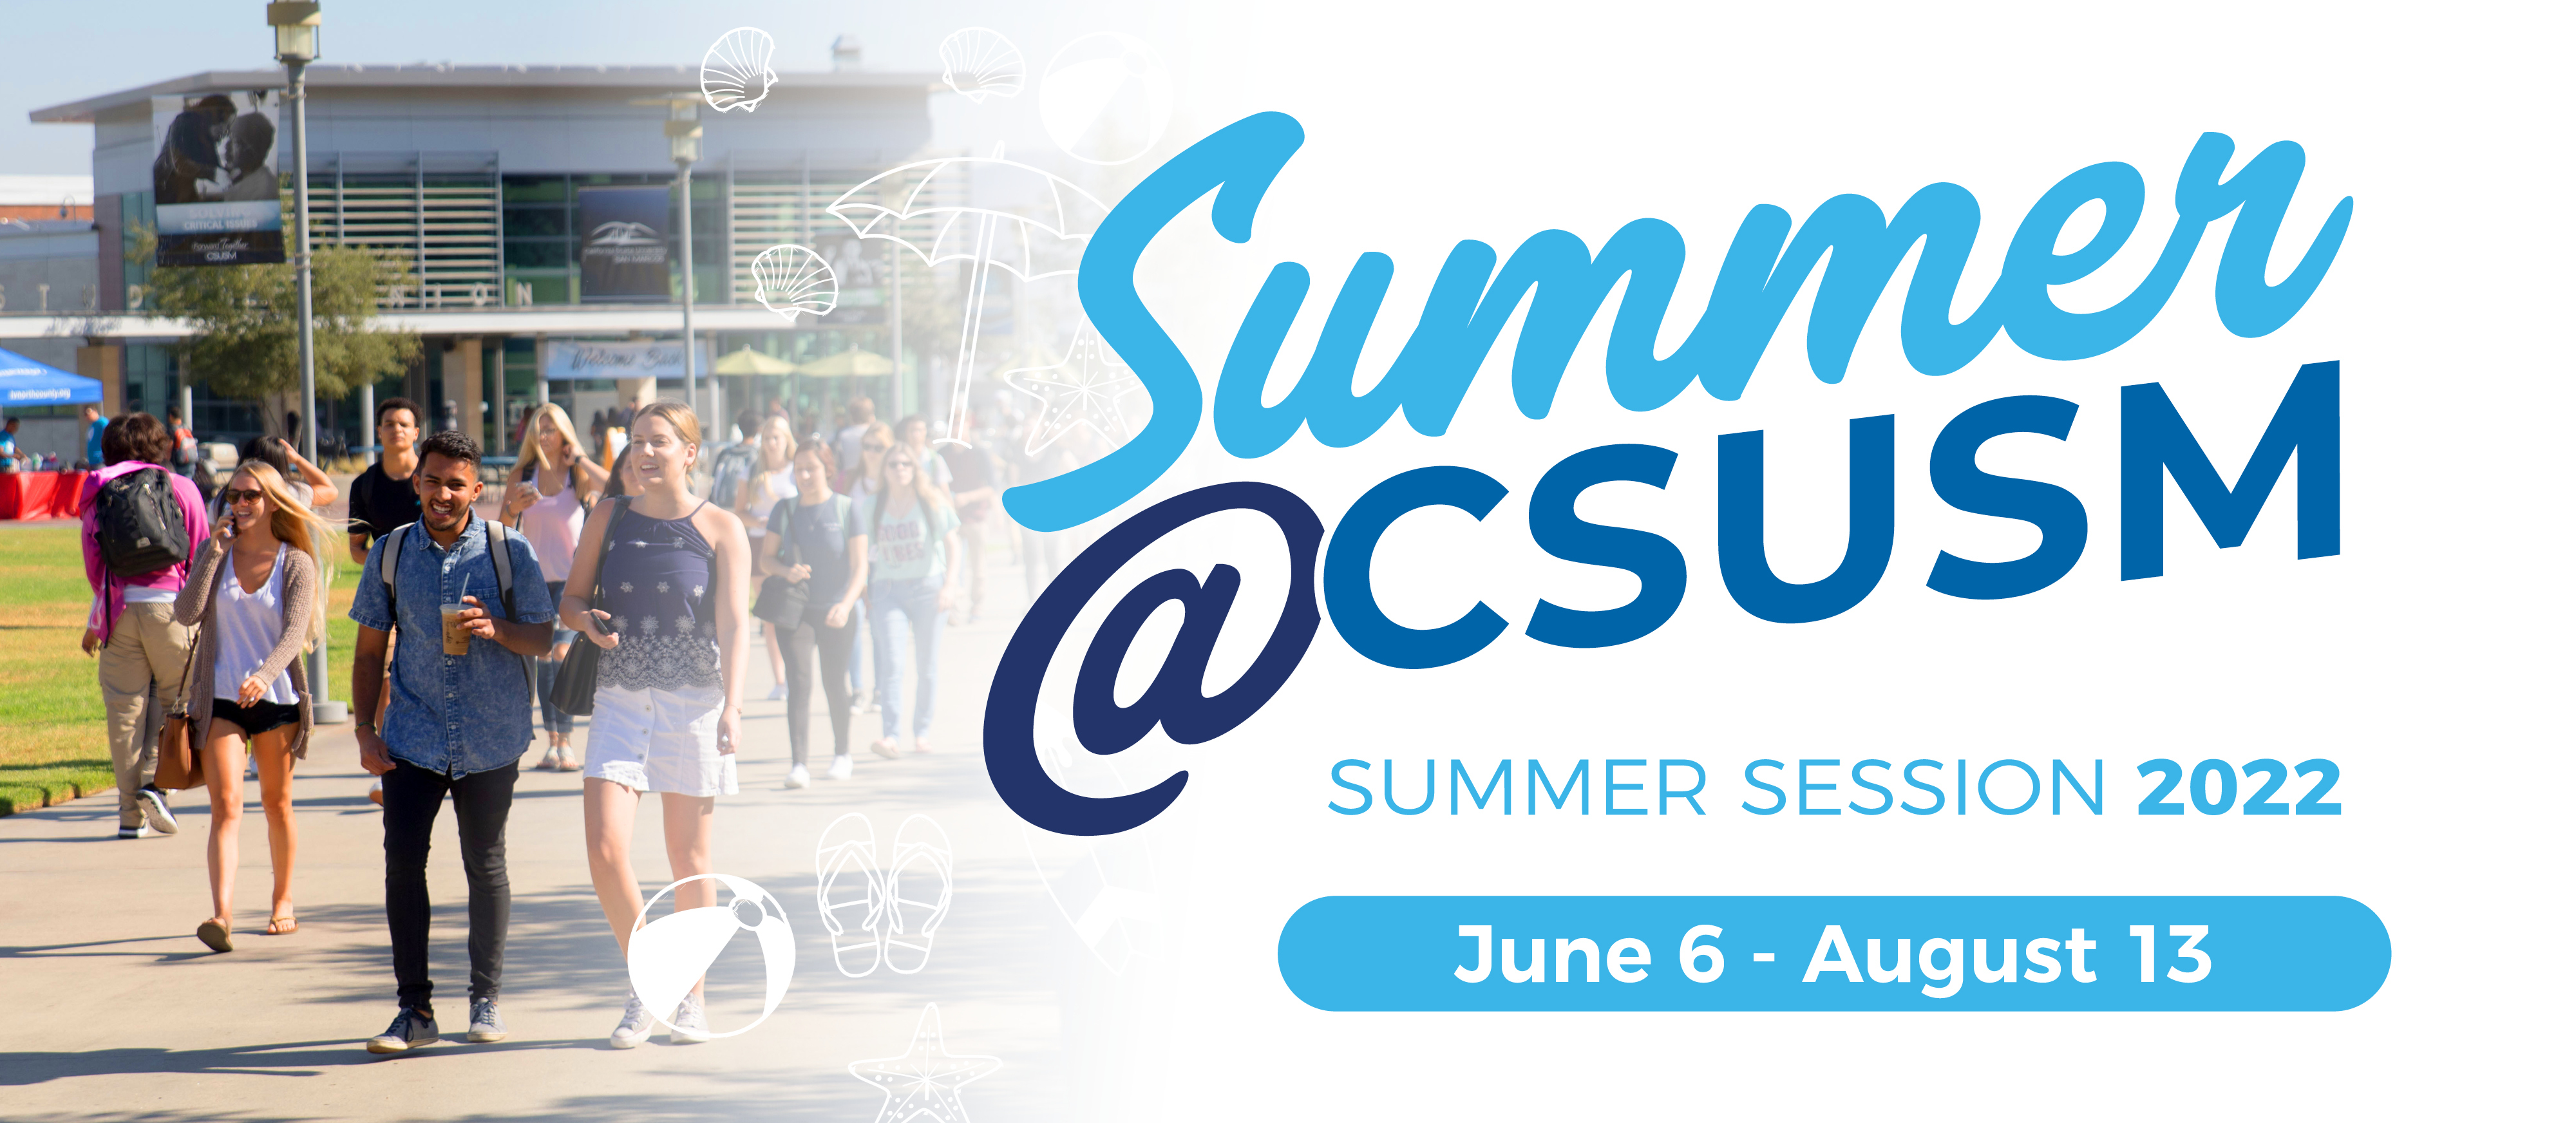 Csusm Calendar 2022 Summer 2022 | Extended Learning | Csusm